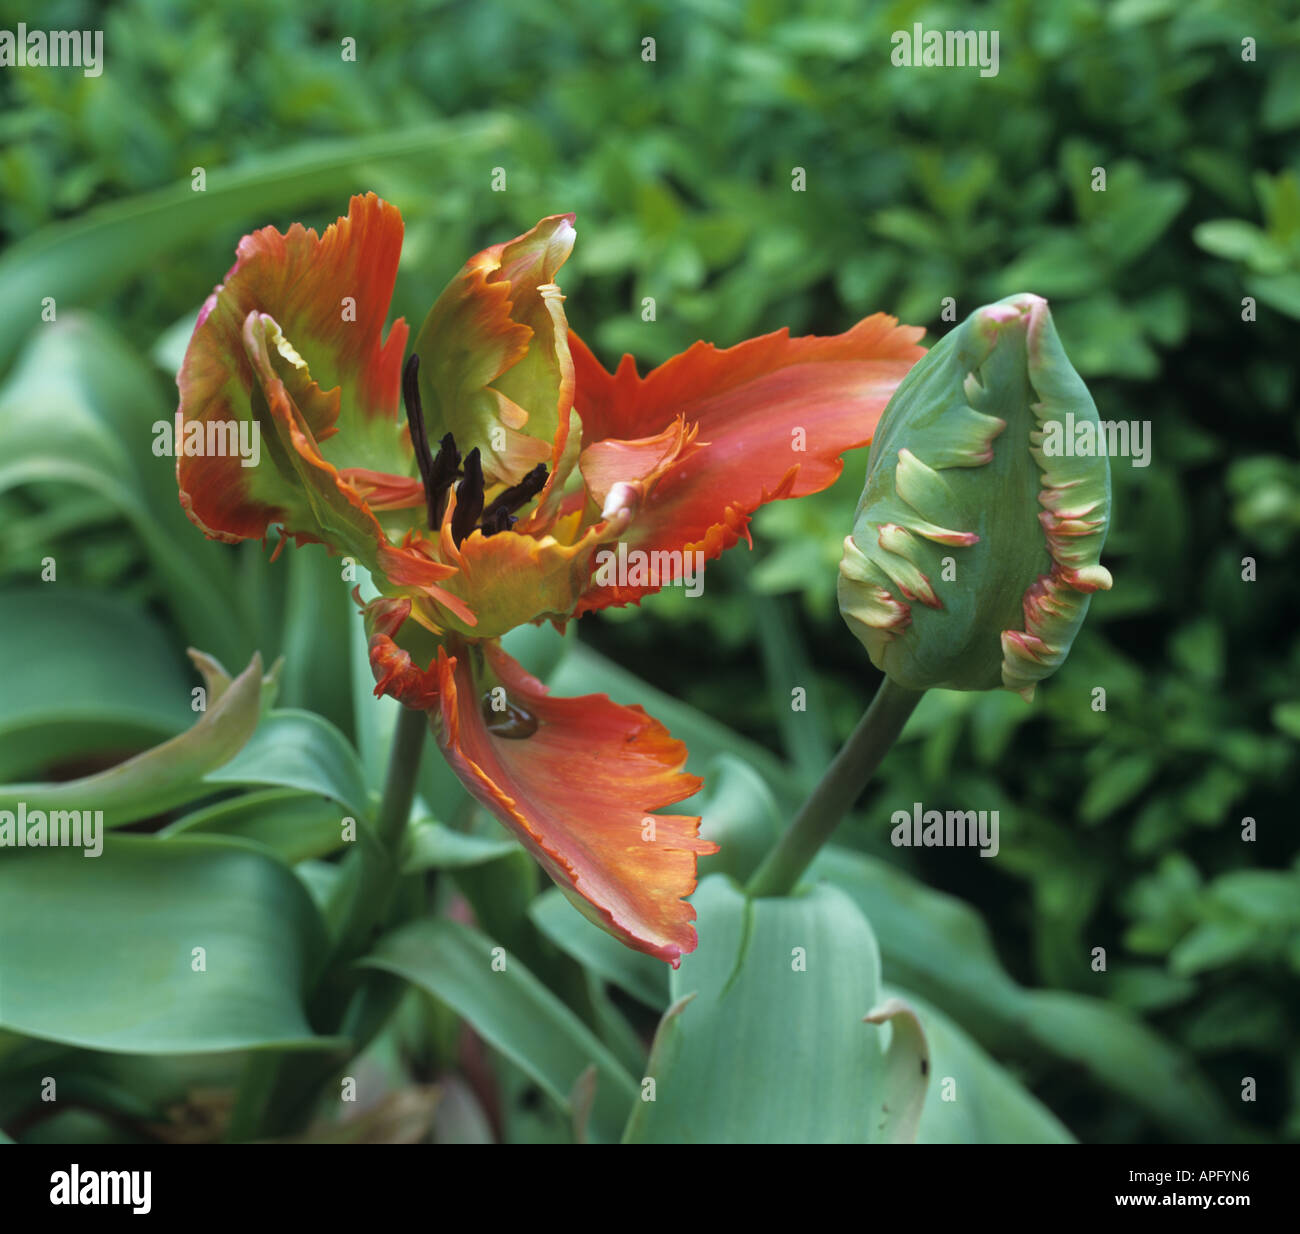 Flower and bud of tulip Orange Favourite Stock Photo